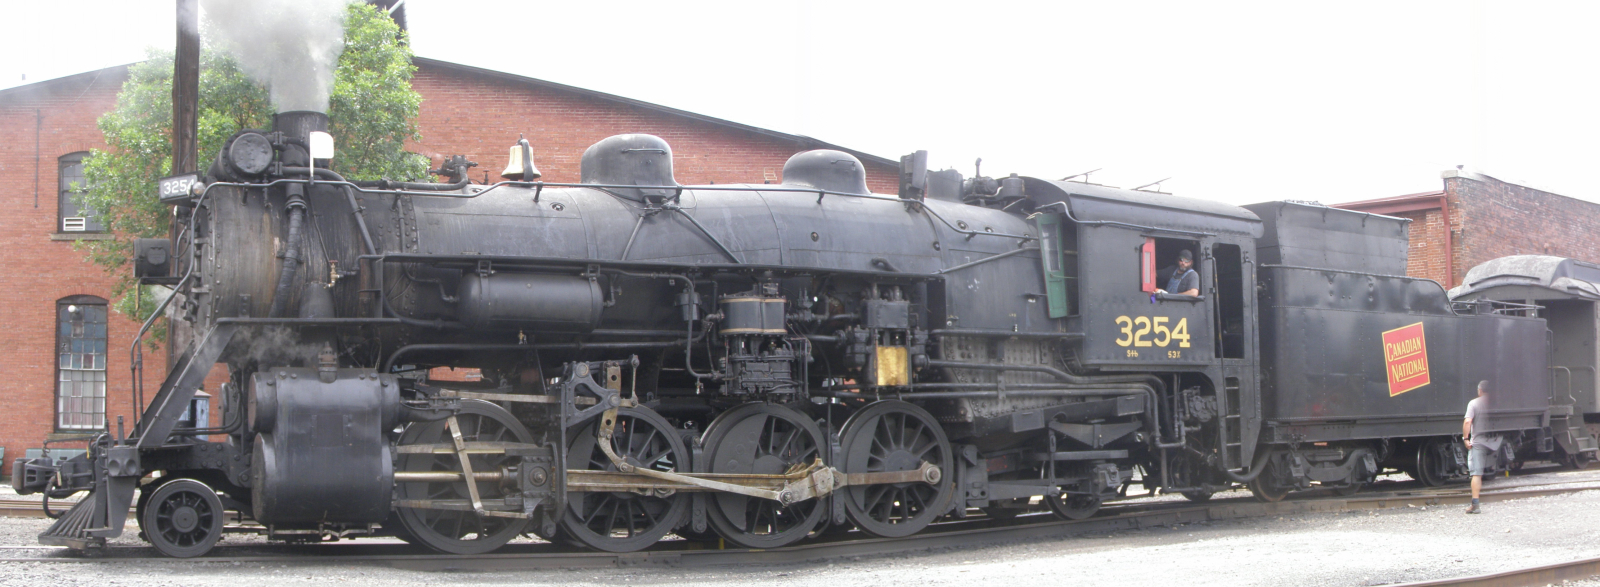 No. 3254 in June 2011 in “Steamtown” Scranton, Pennsylvania